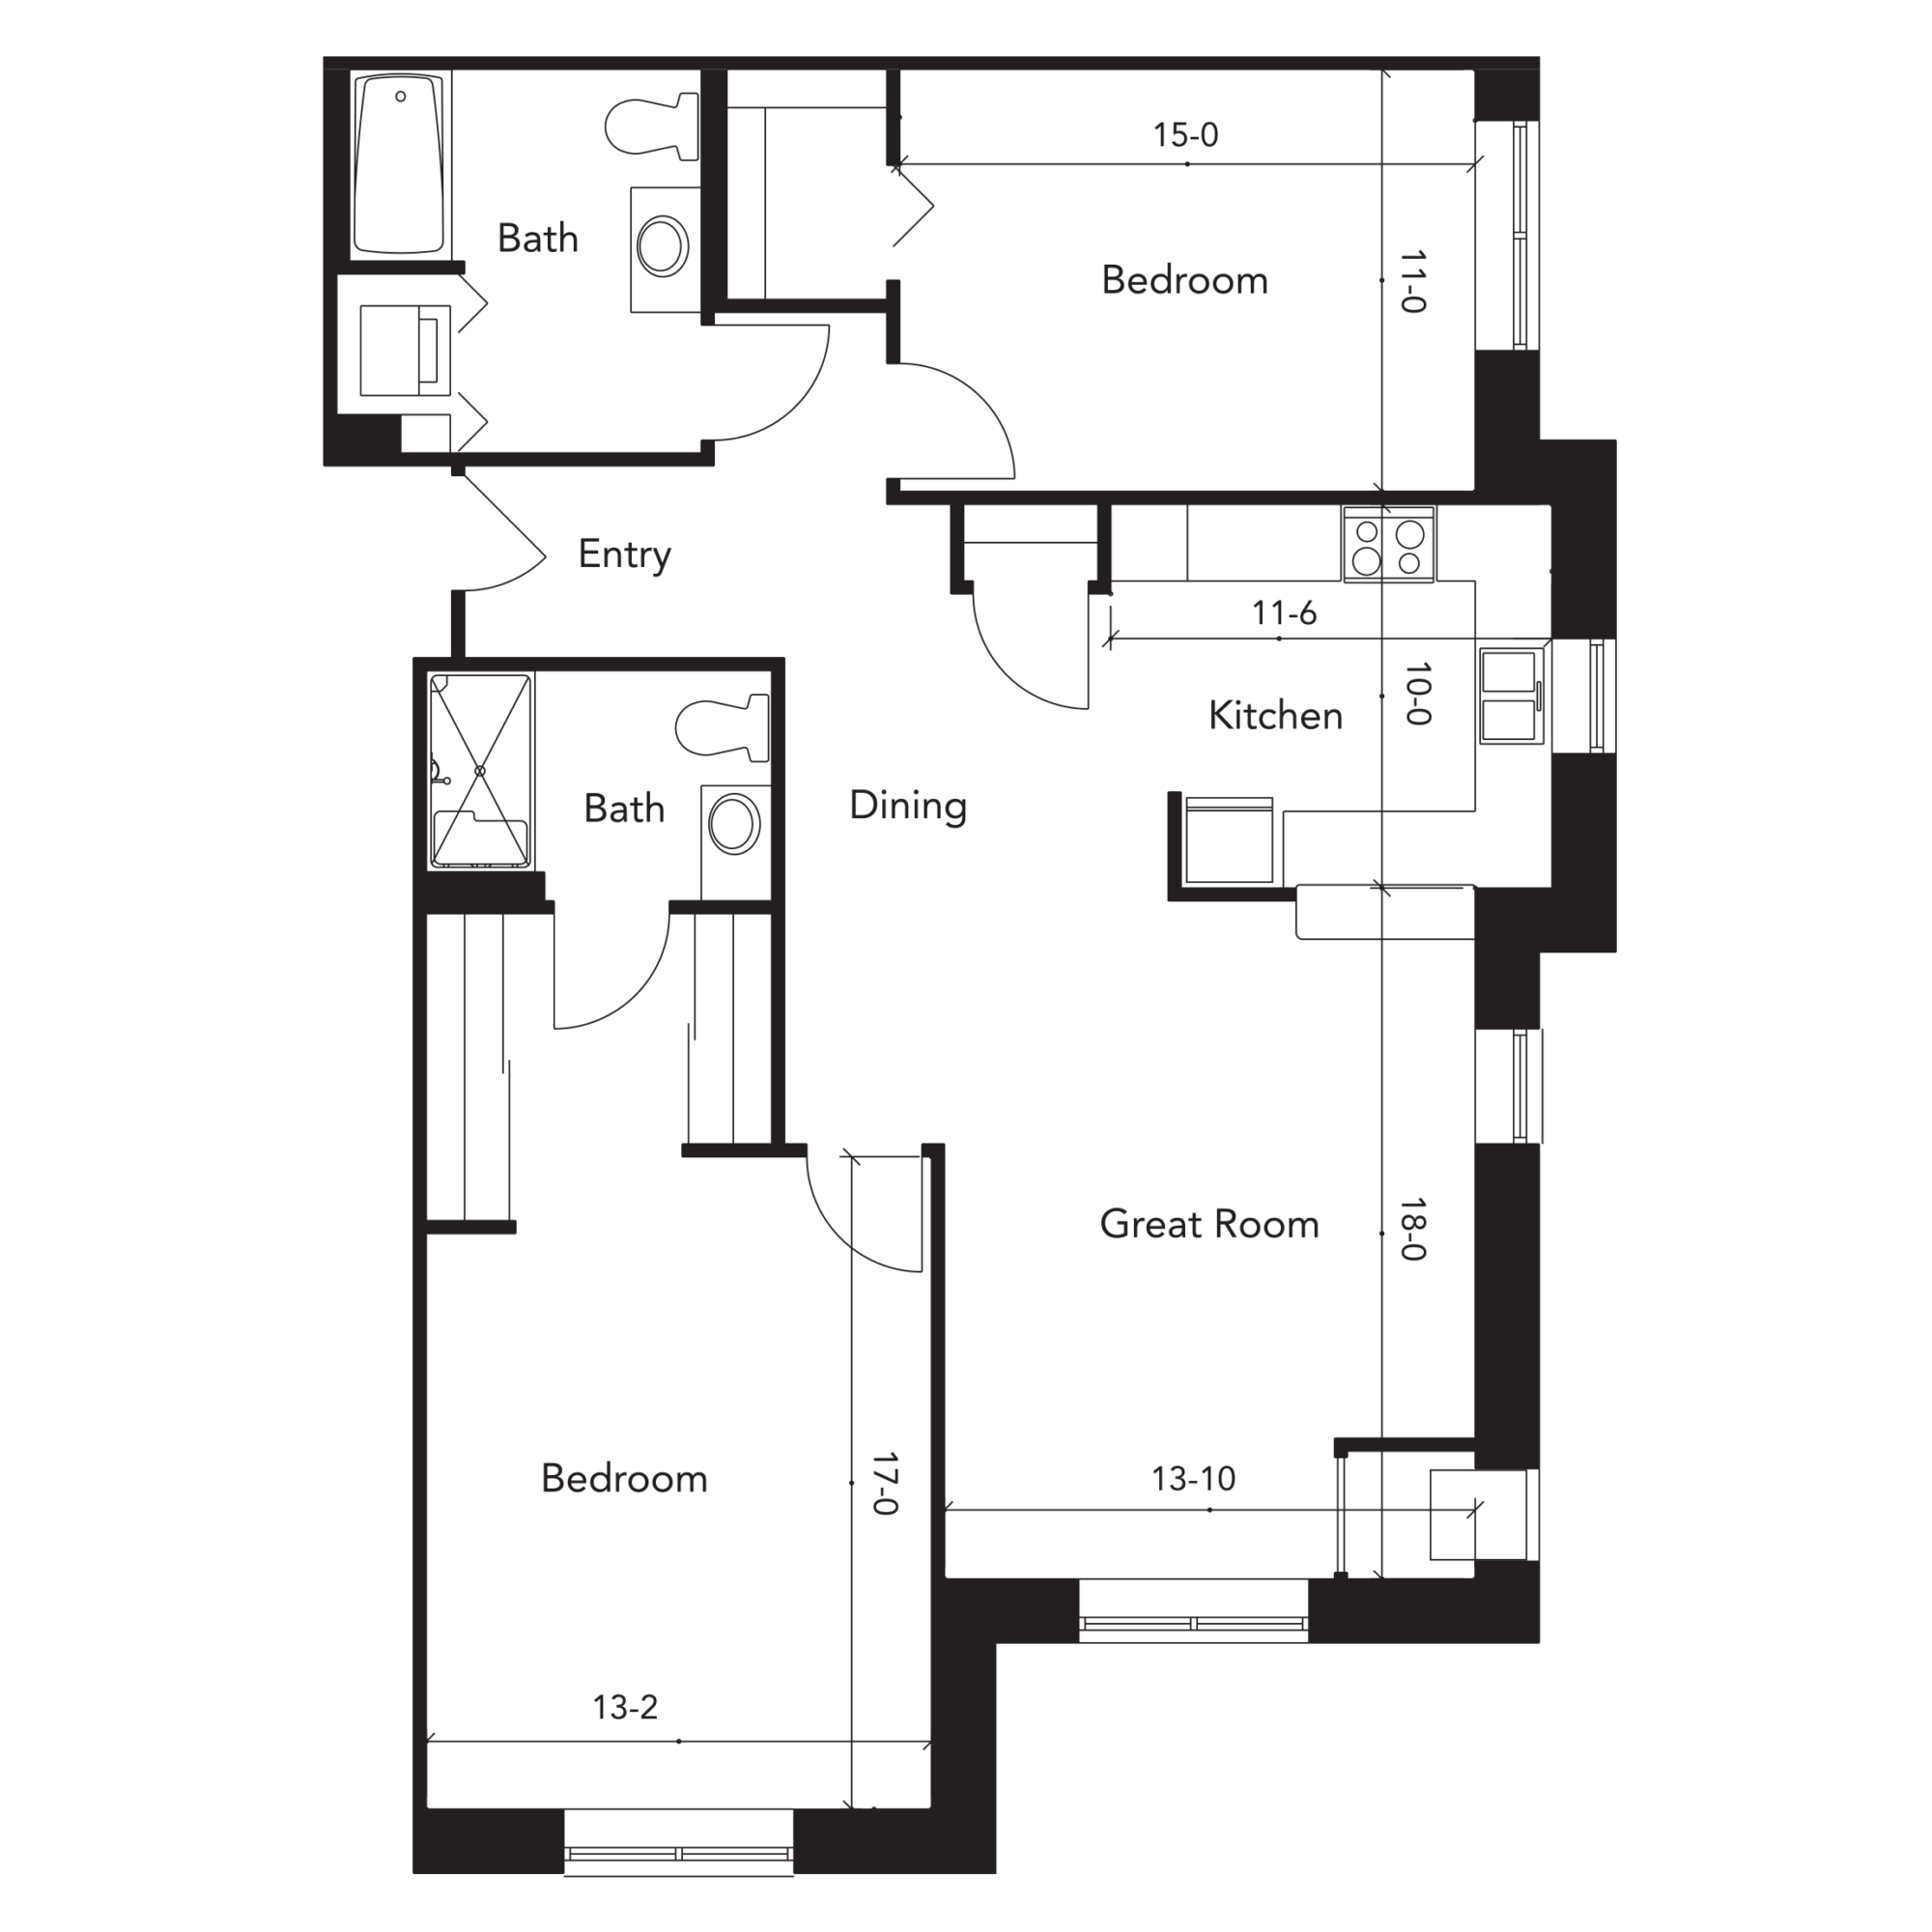 Floorplan sycamore